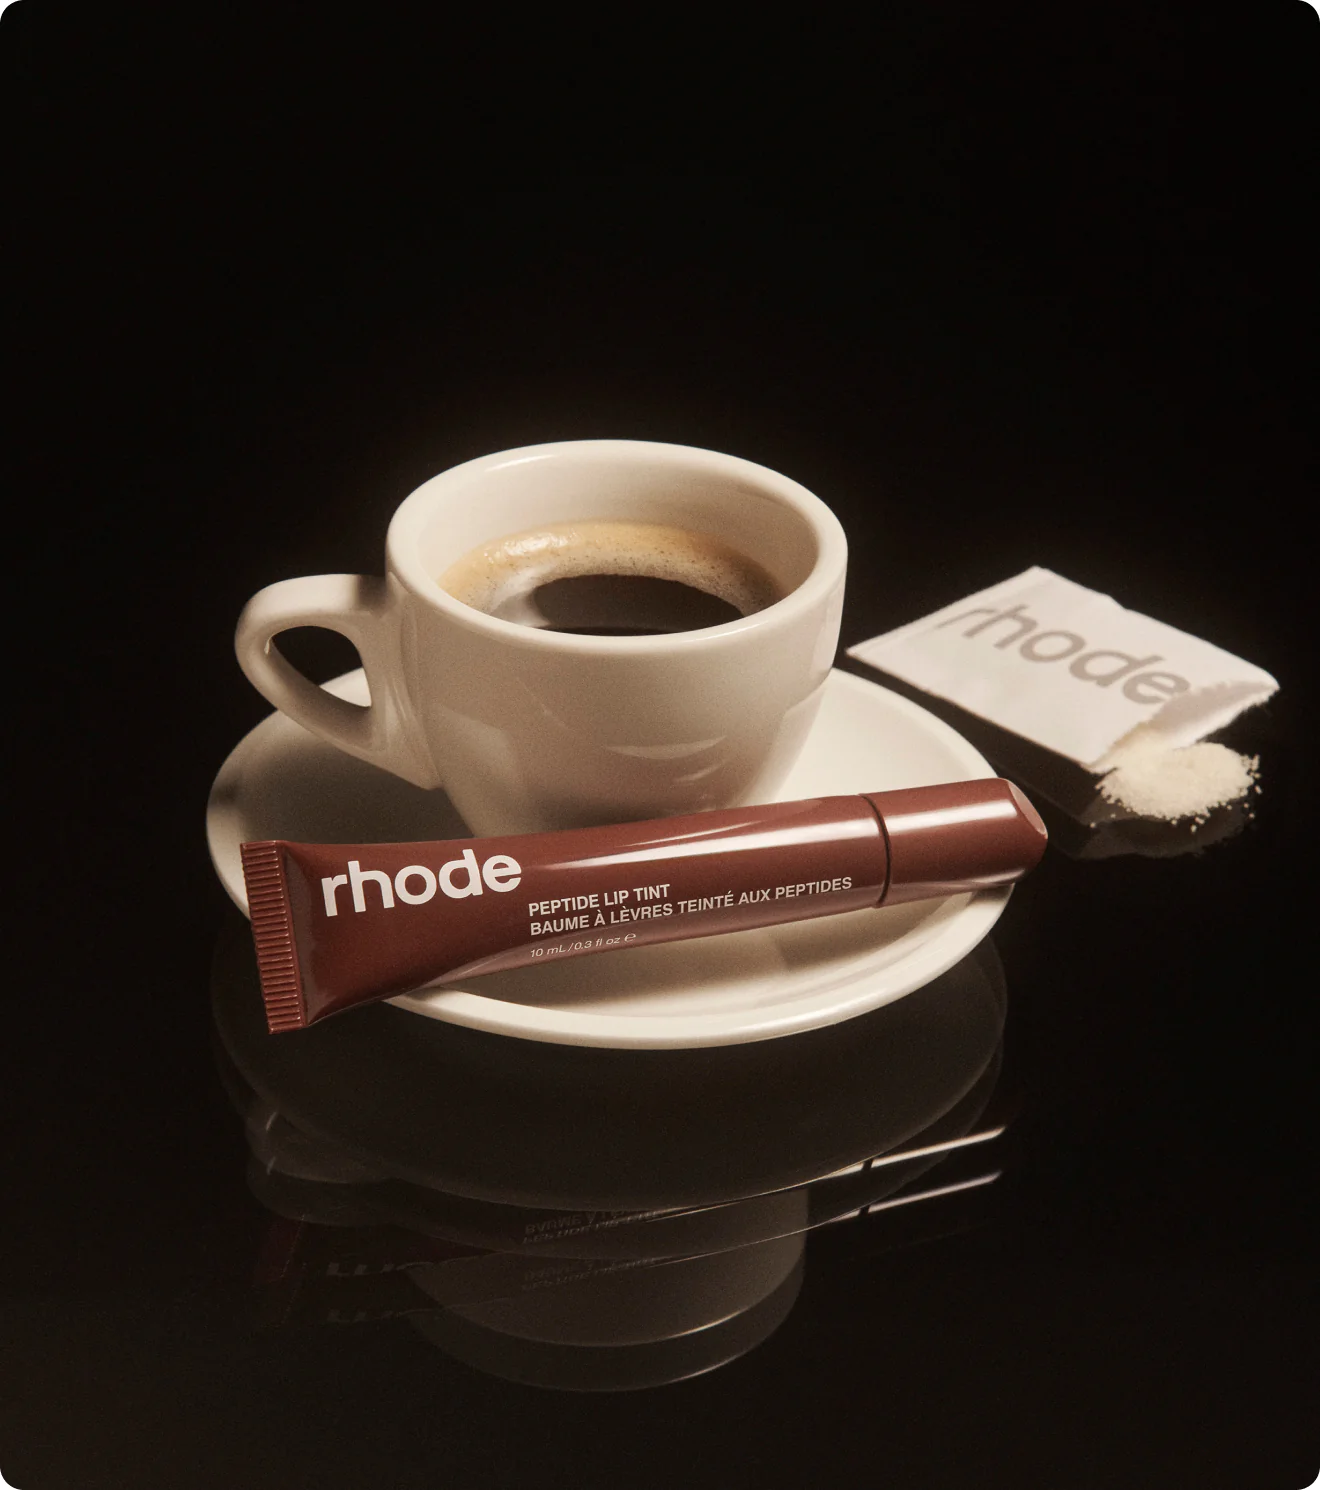 espresso-rhode peptide lipt tint.jpg